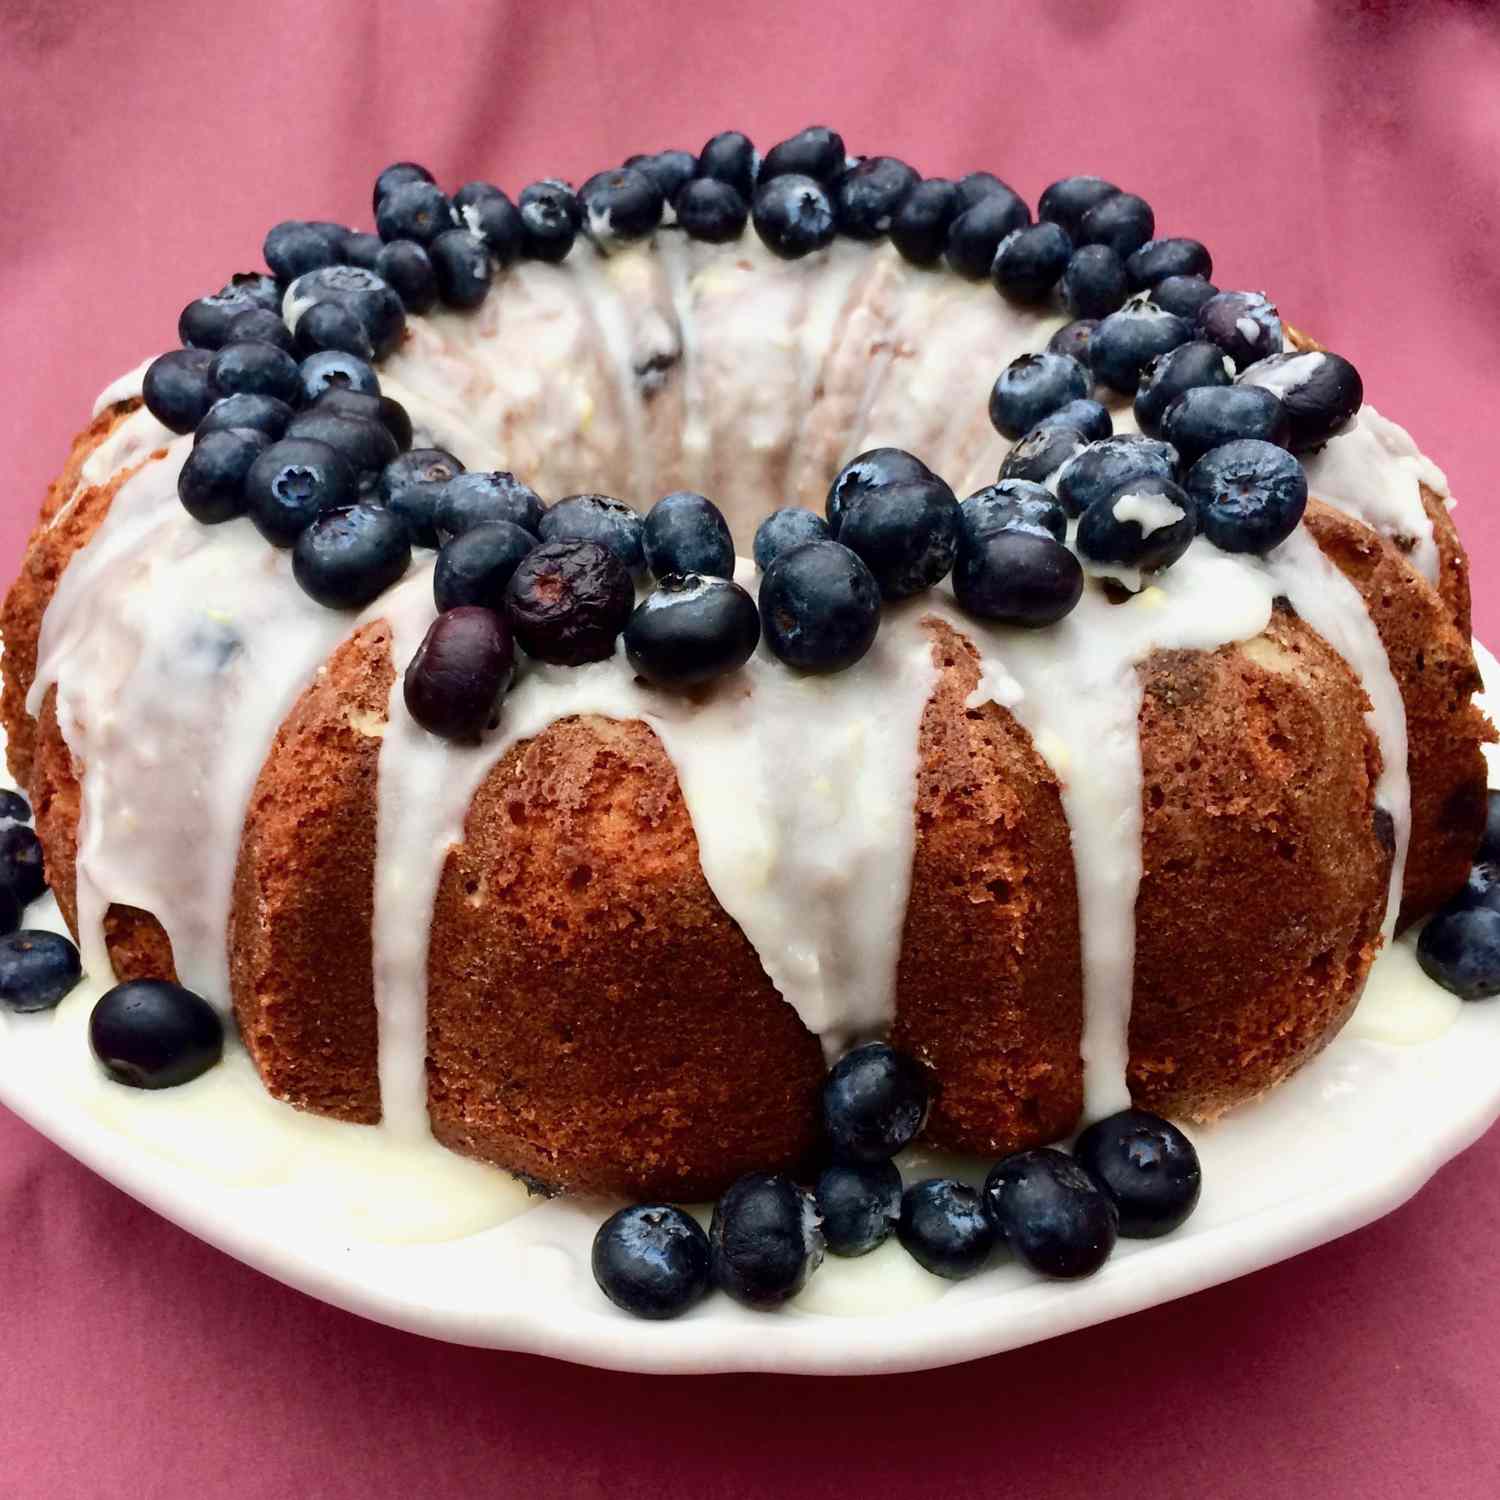 10 Spring Bundt Cake Recipes to Help You Celebrate the Season. allrecipes.c...